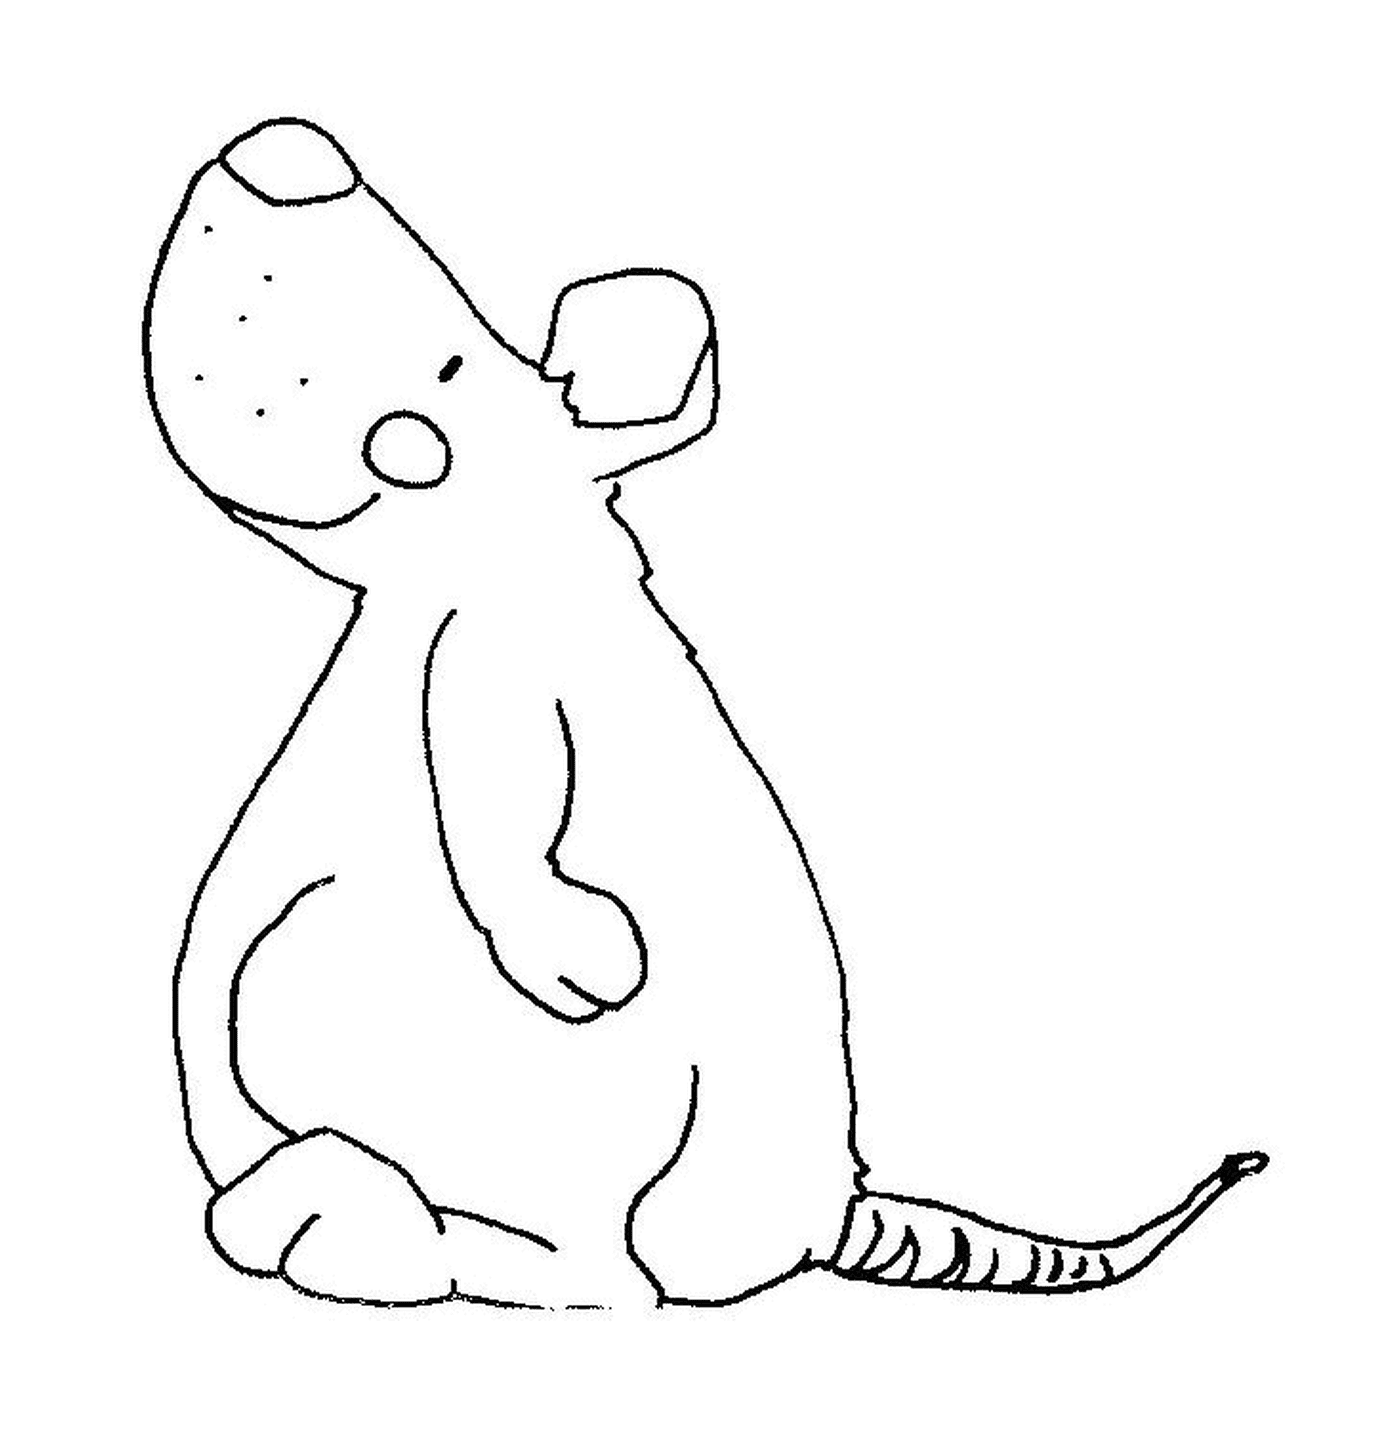  A big mouse 